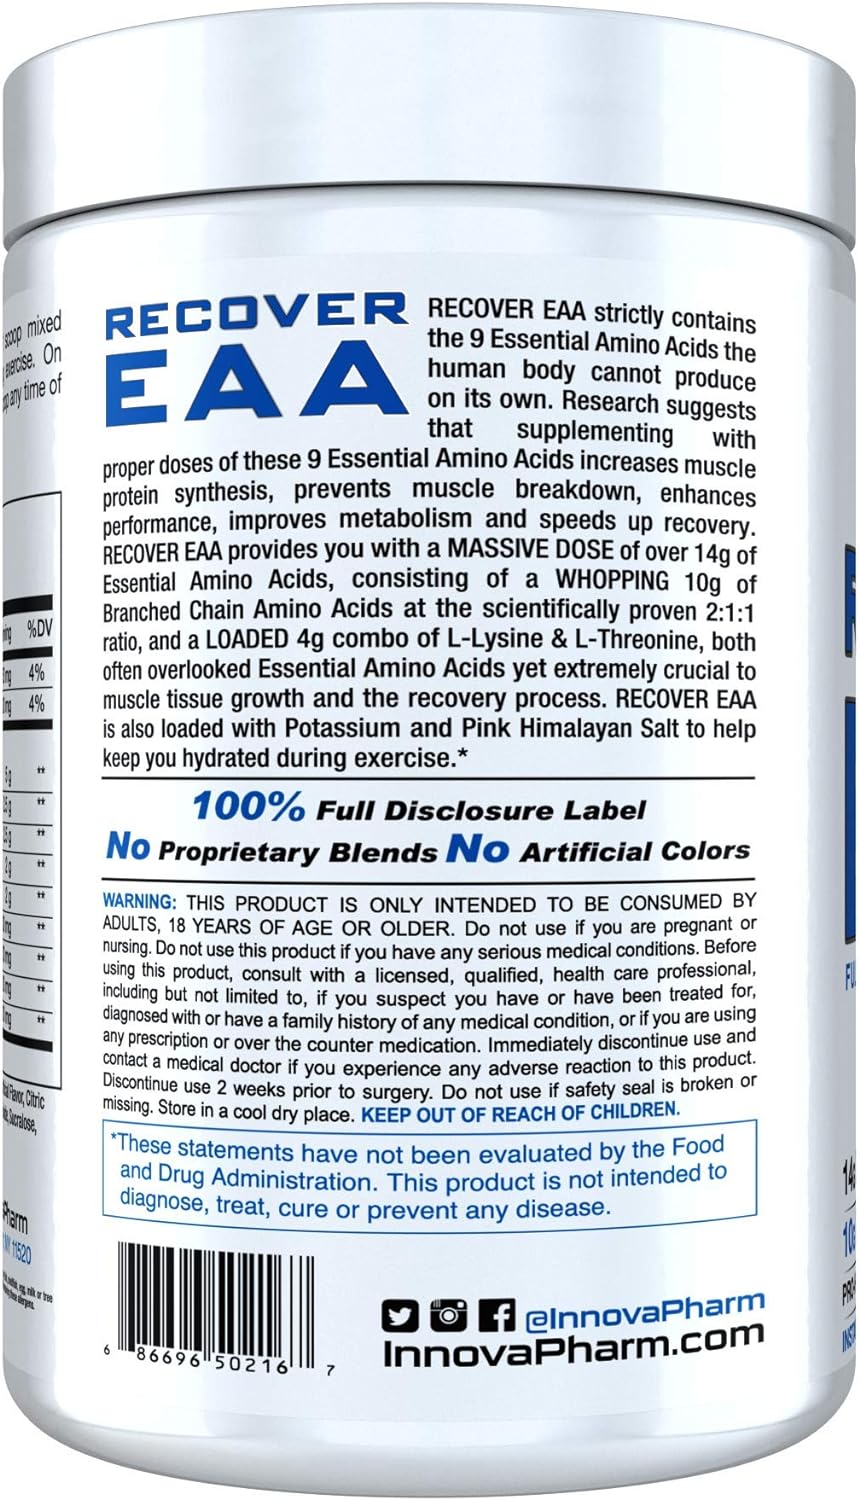 InnovaPharm Recover EAA Powder - Pink Lemonade - 19.5 Ounces